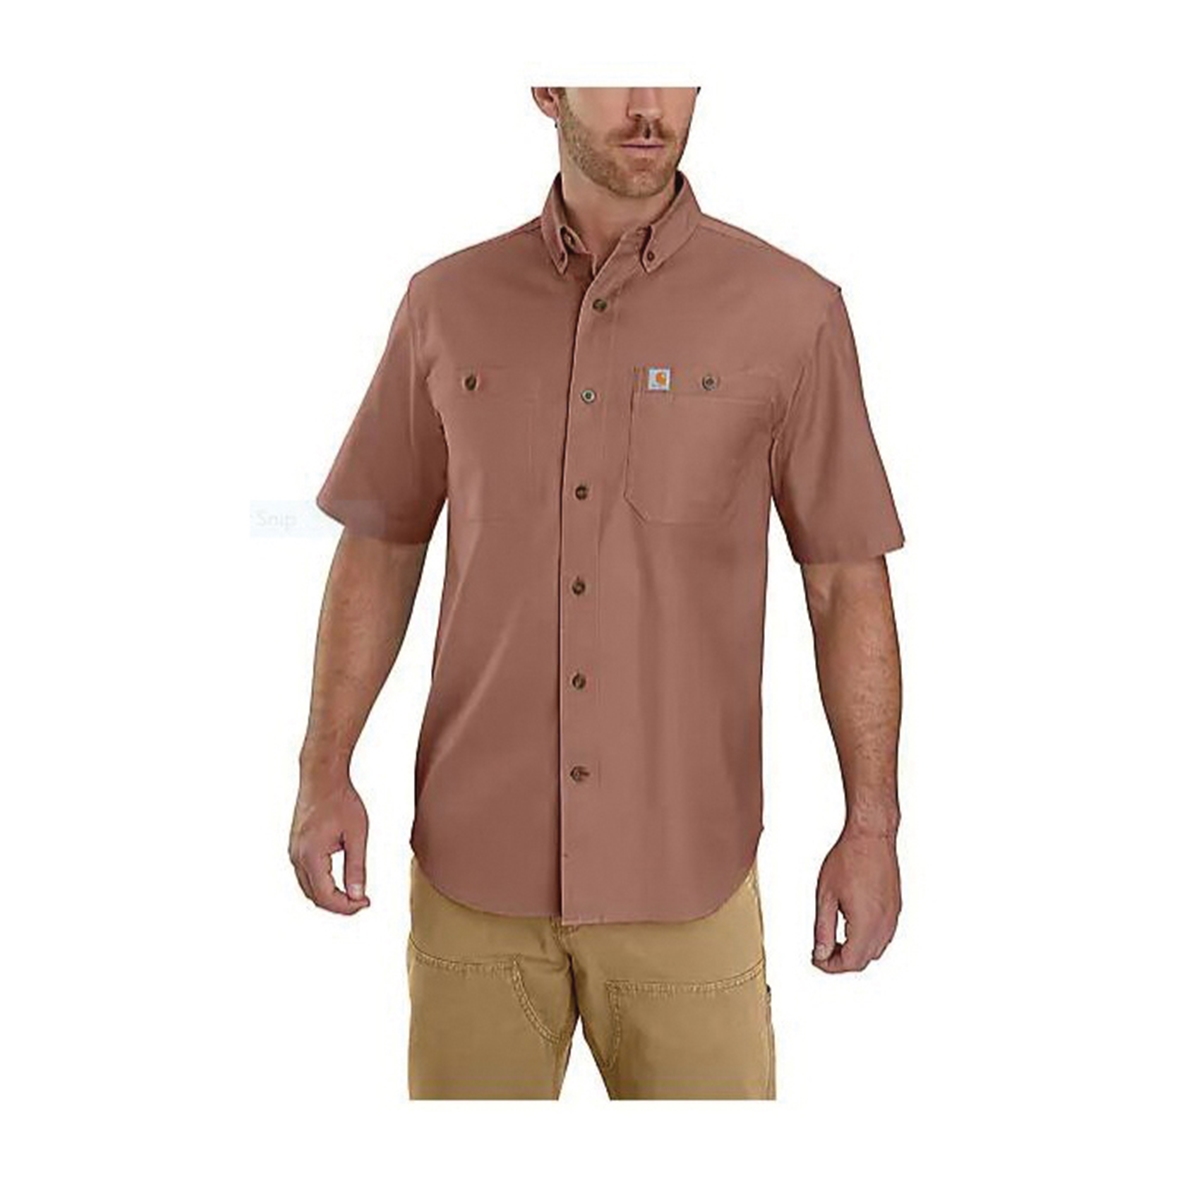 Carhartt 105182 T-Shirt, S, Regular, Cotton/Polyester, Rib-Knit